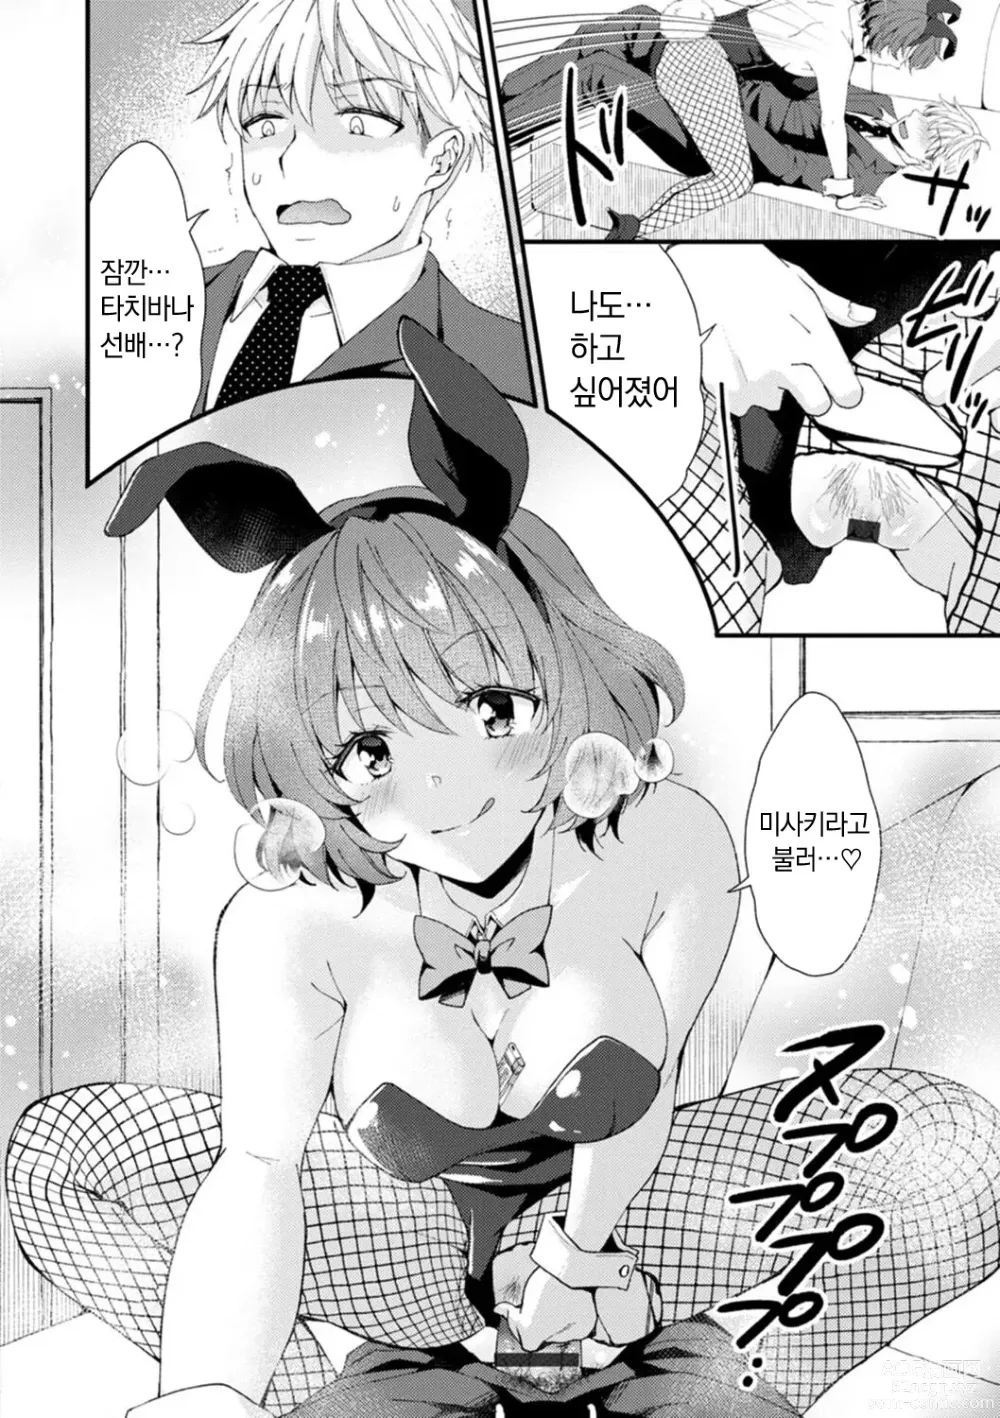 Page 14 of manga 취미가 바니걸이라니 정말이에요?